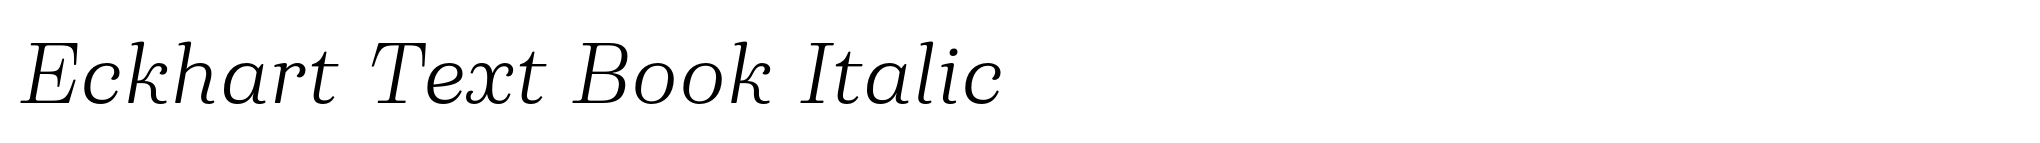 Eckhart Text Book Italic image